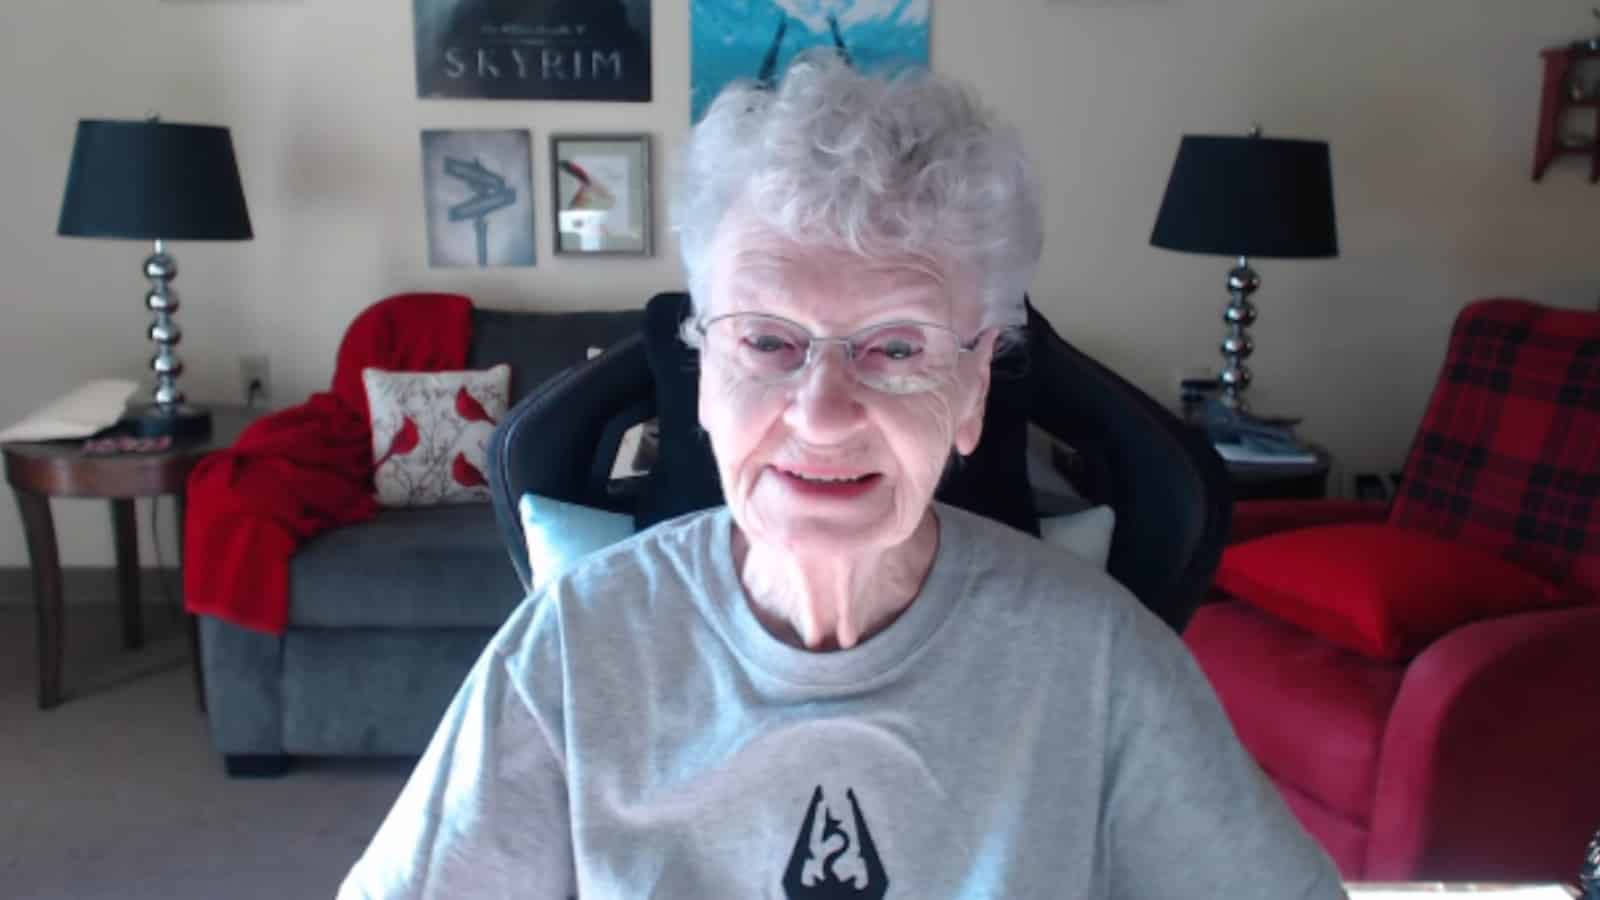 Skyrim grandma wants to play elder scrolls 6